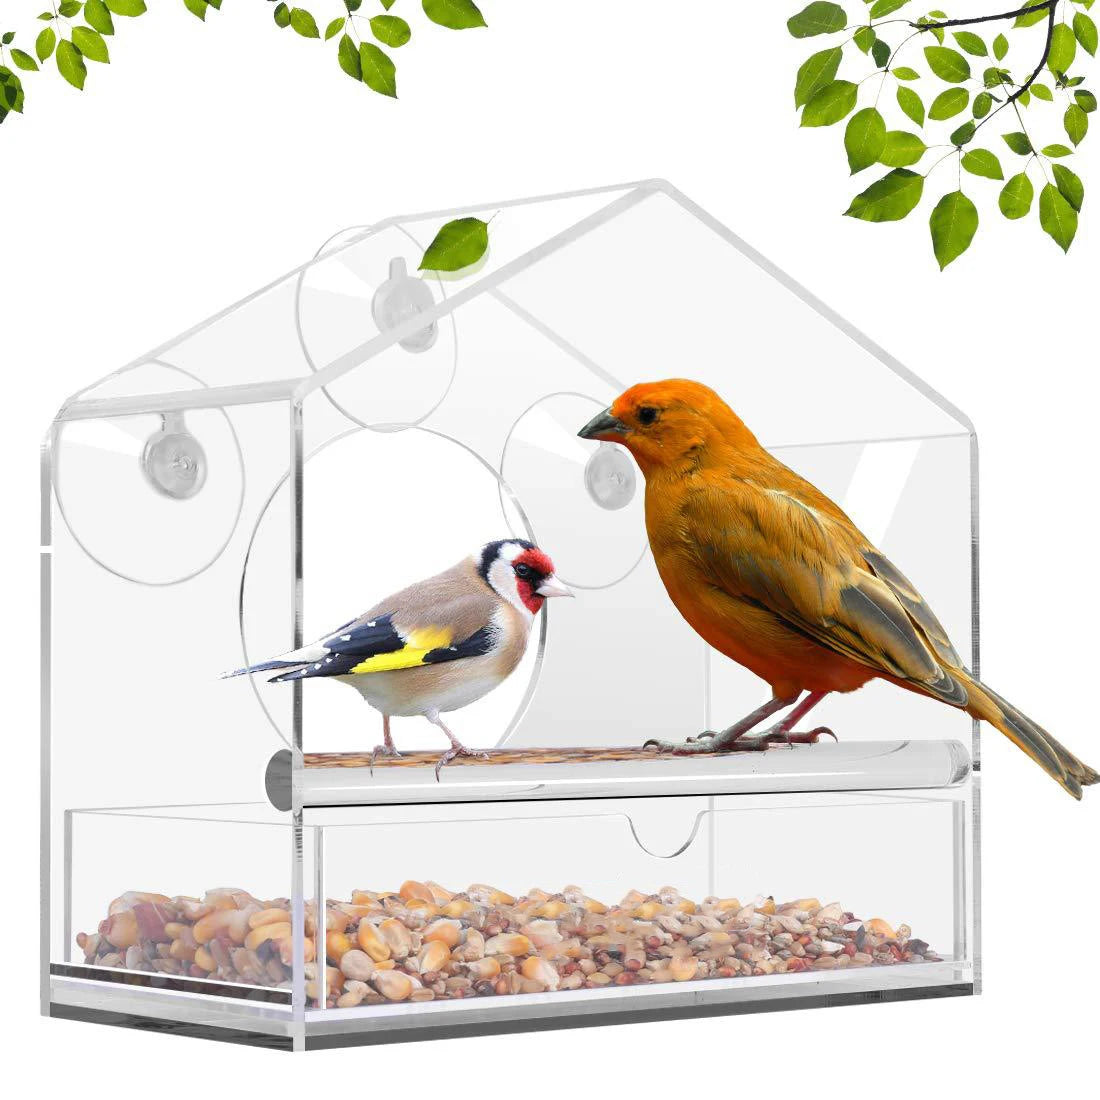 Acrylic Window Bird Feeder Tray for Close Birdwatching  petlums.com   